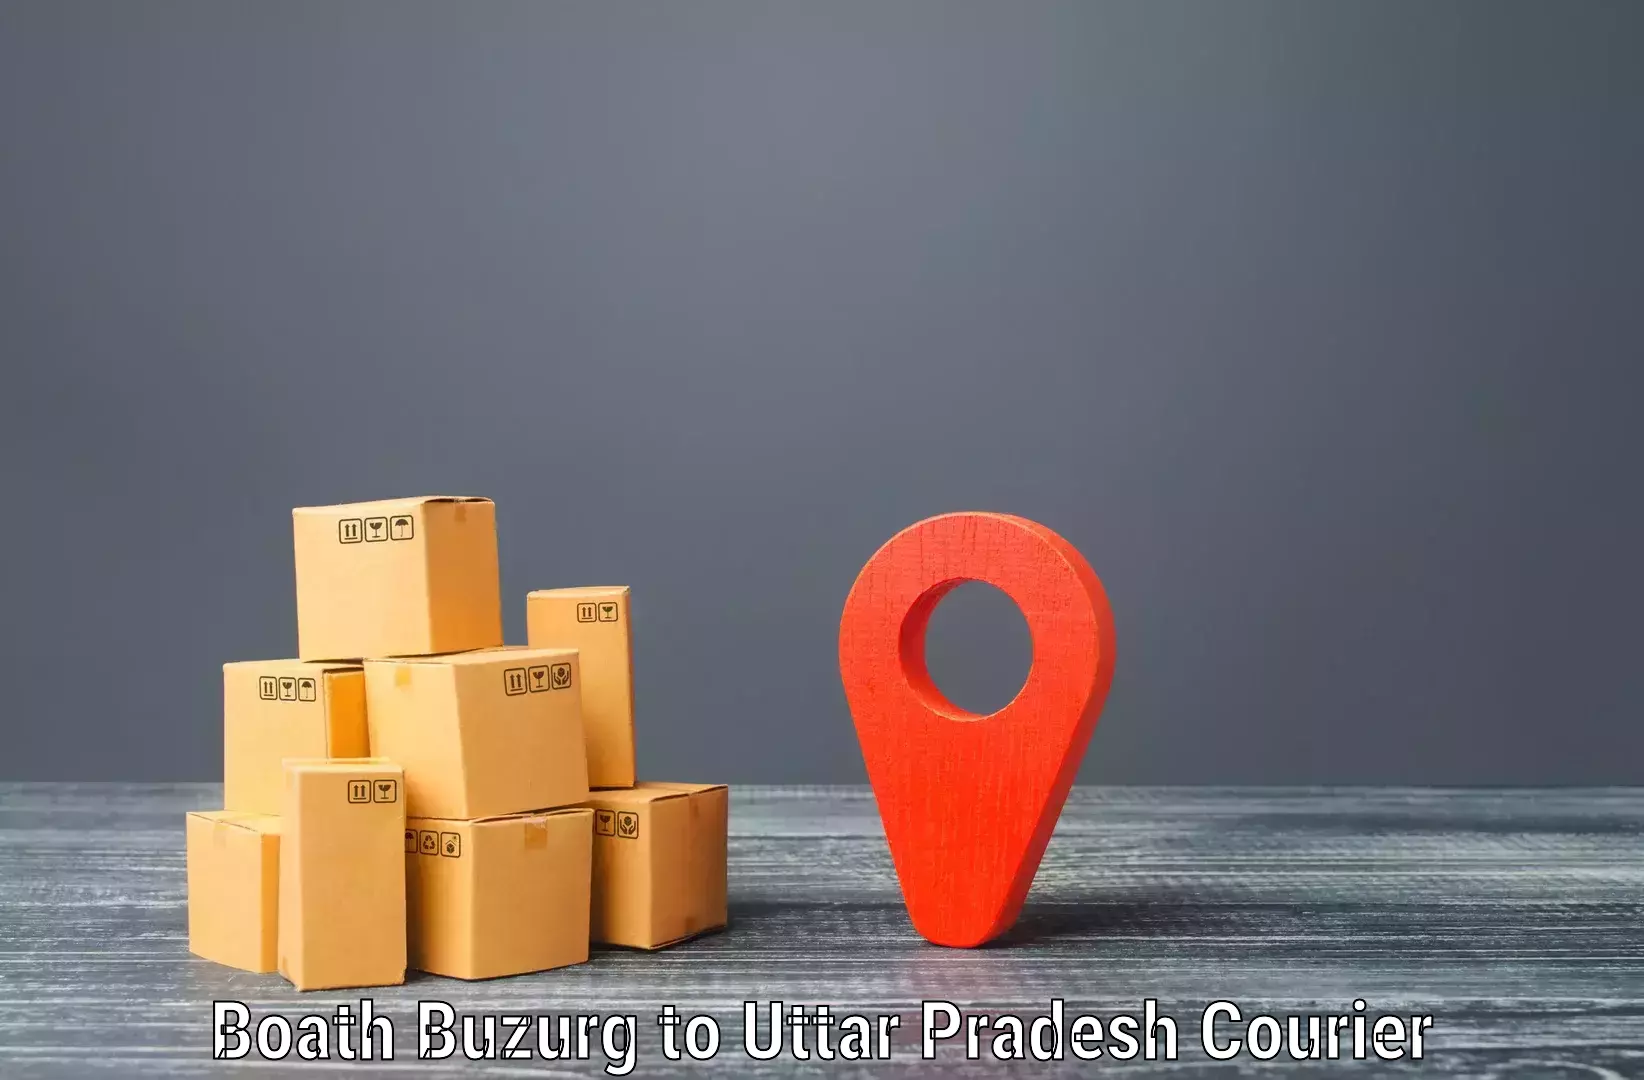 Round-the-clock parcel delivery Boath Buzurg to Aligarh Muslim University